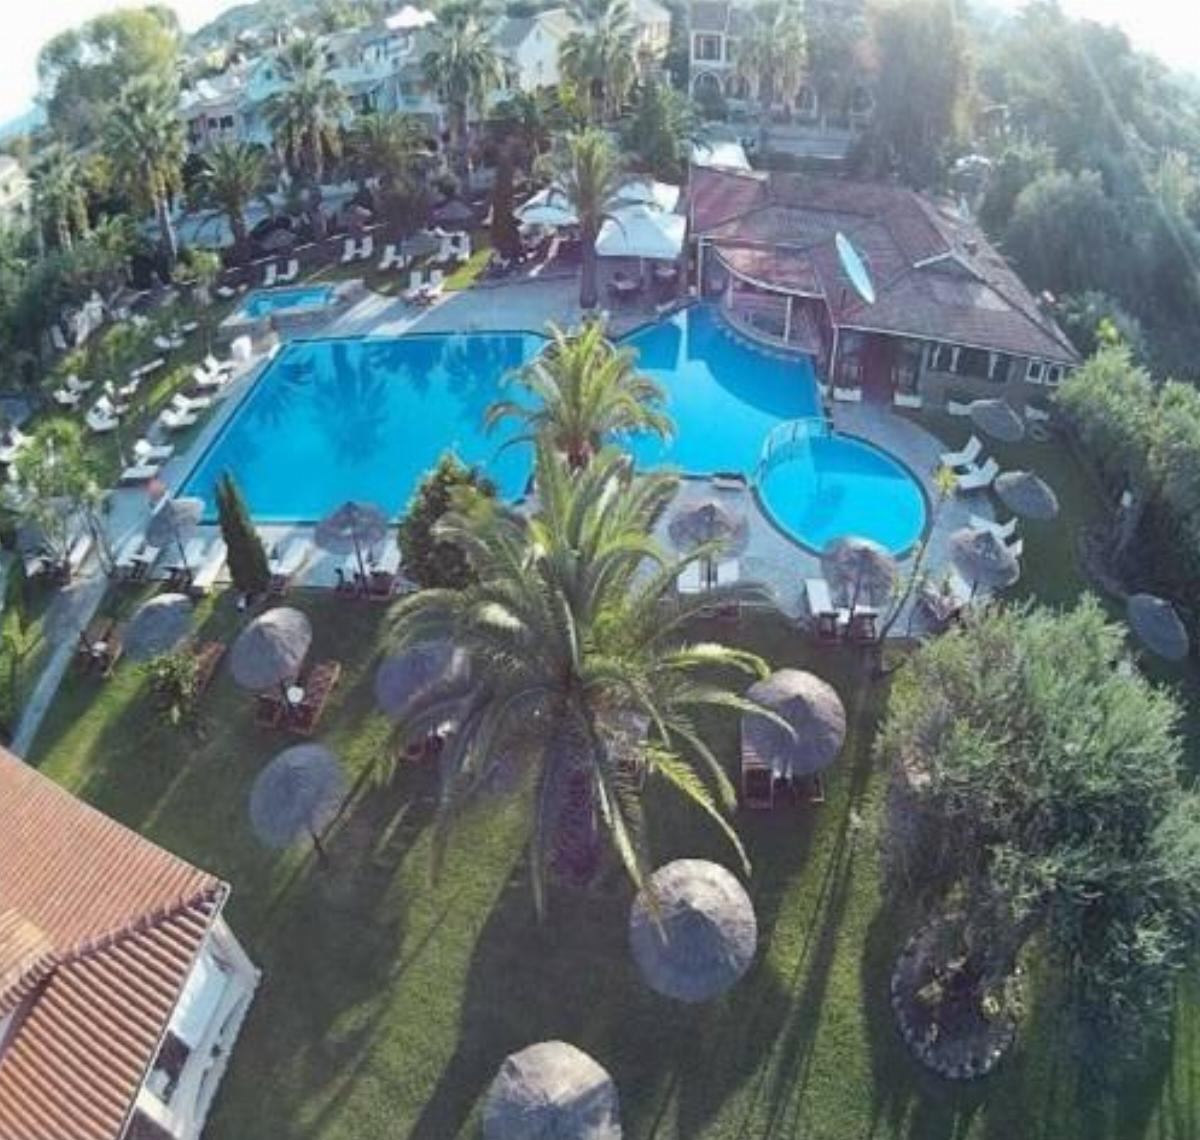 Theodoros Resort